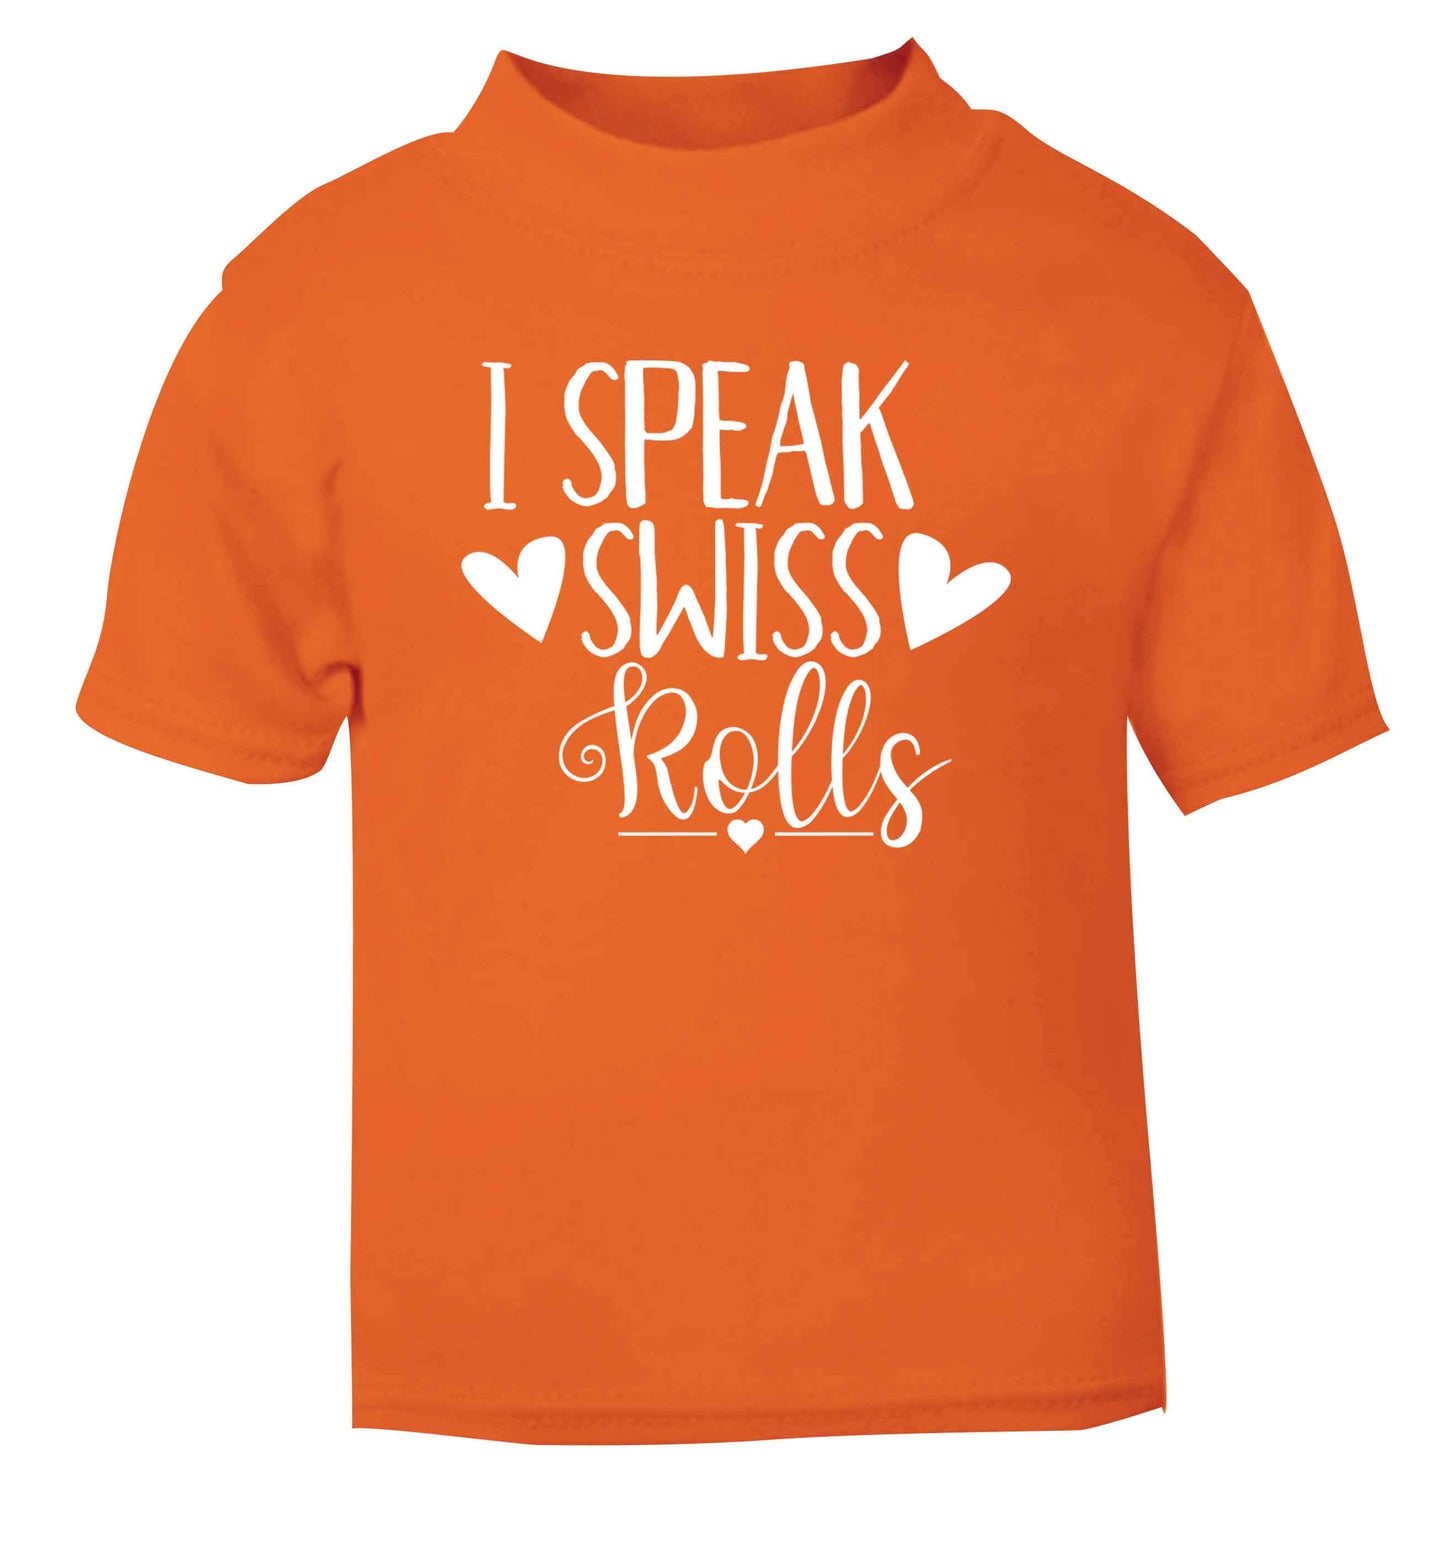 I speak swiss..rolls orange Baby Toddler Tshirt 2 Years